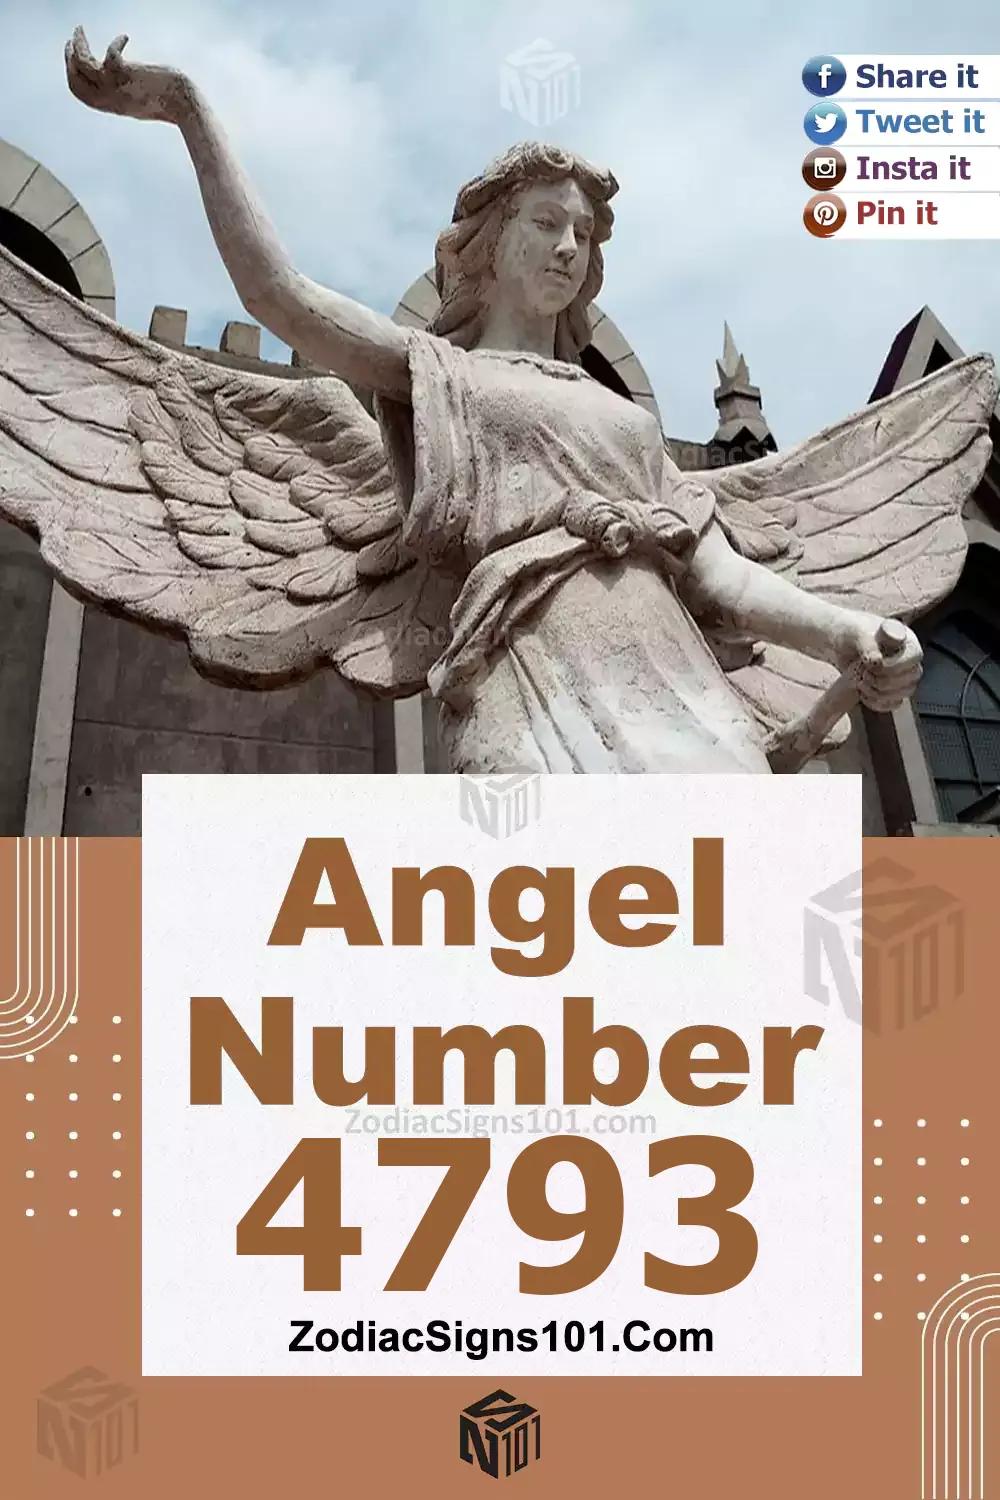 4793-Angel-Number-Meaning.jpg